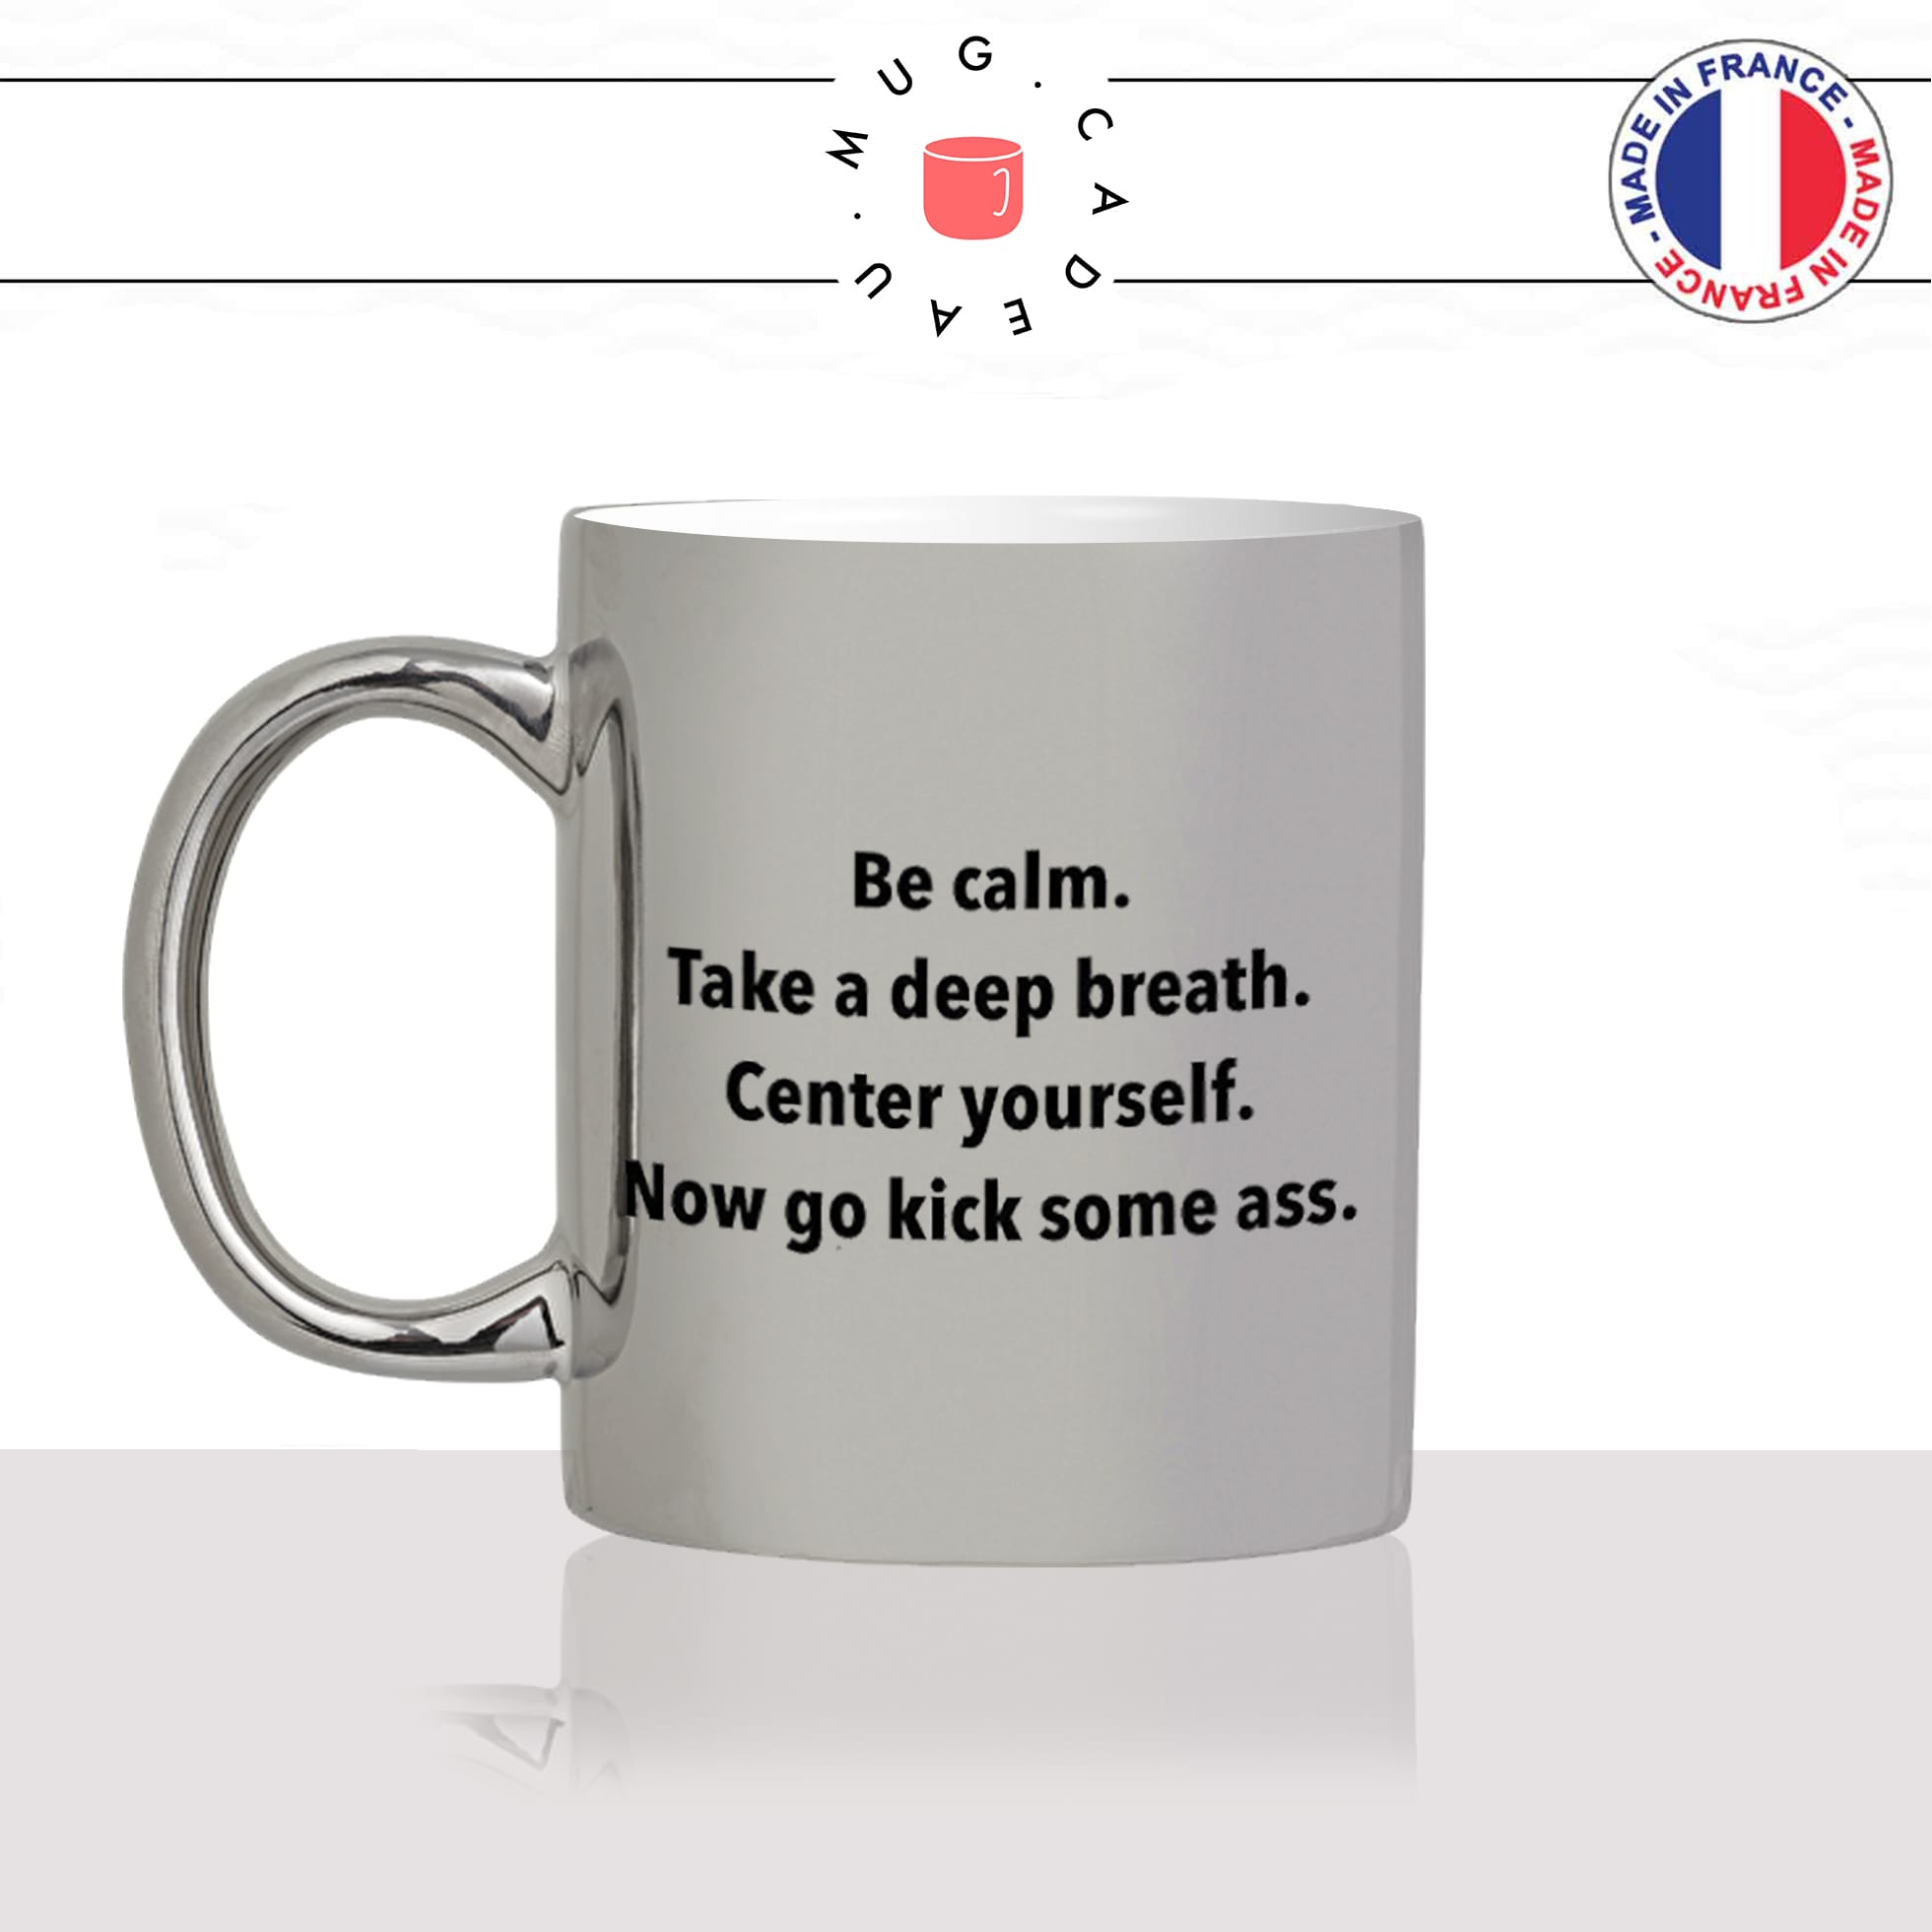 mug-tasse-argent-argenté-silver-be-calm-kick-ass-fitness-musculation-sport-collegue-motivation-humour-idée-cadeau-fun-cool-café-thé-original-min